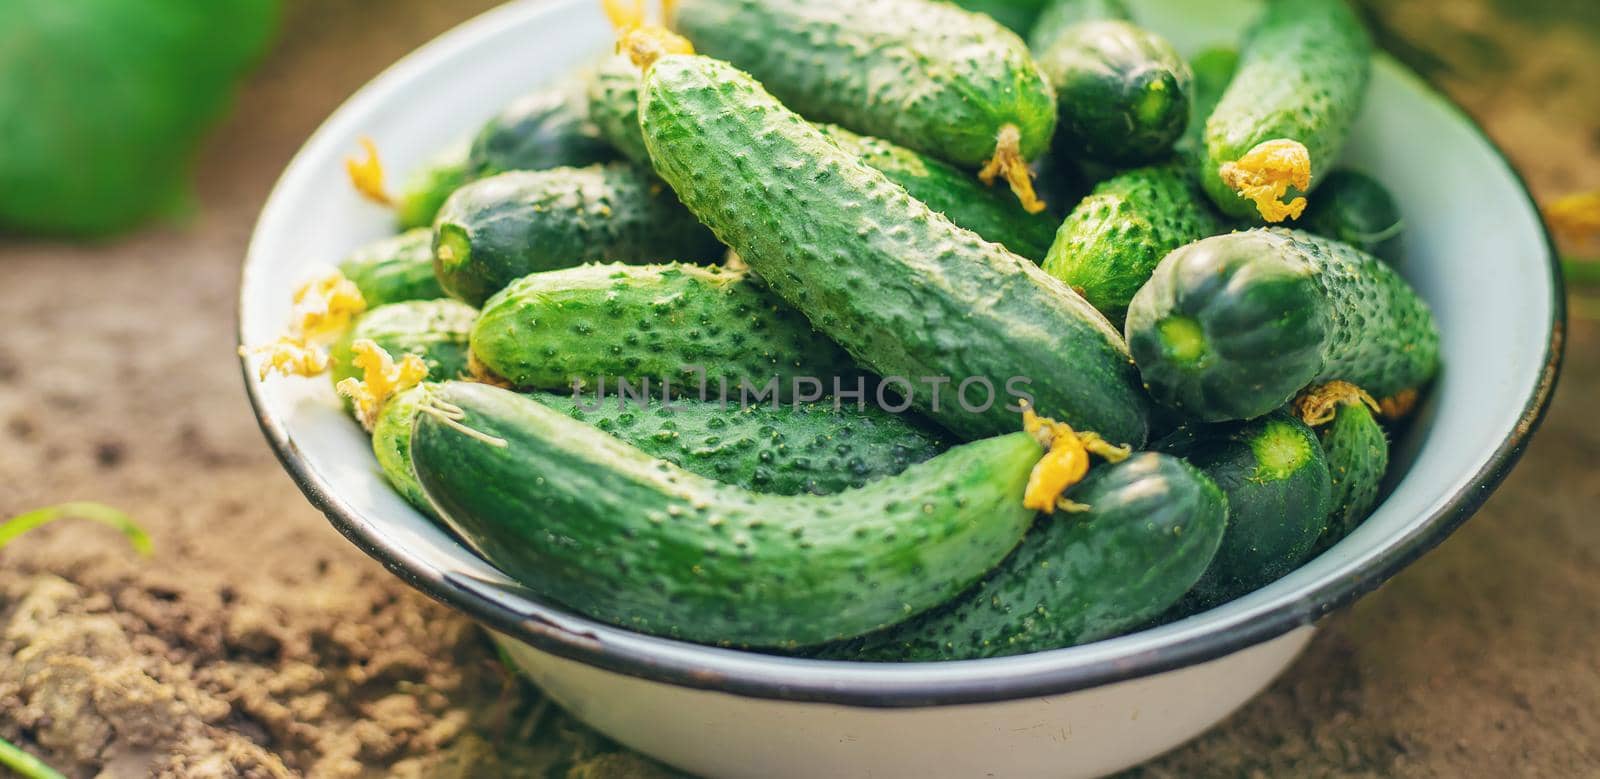 Harvesting homemade cucumbers. Selective focus nature